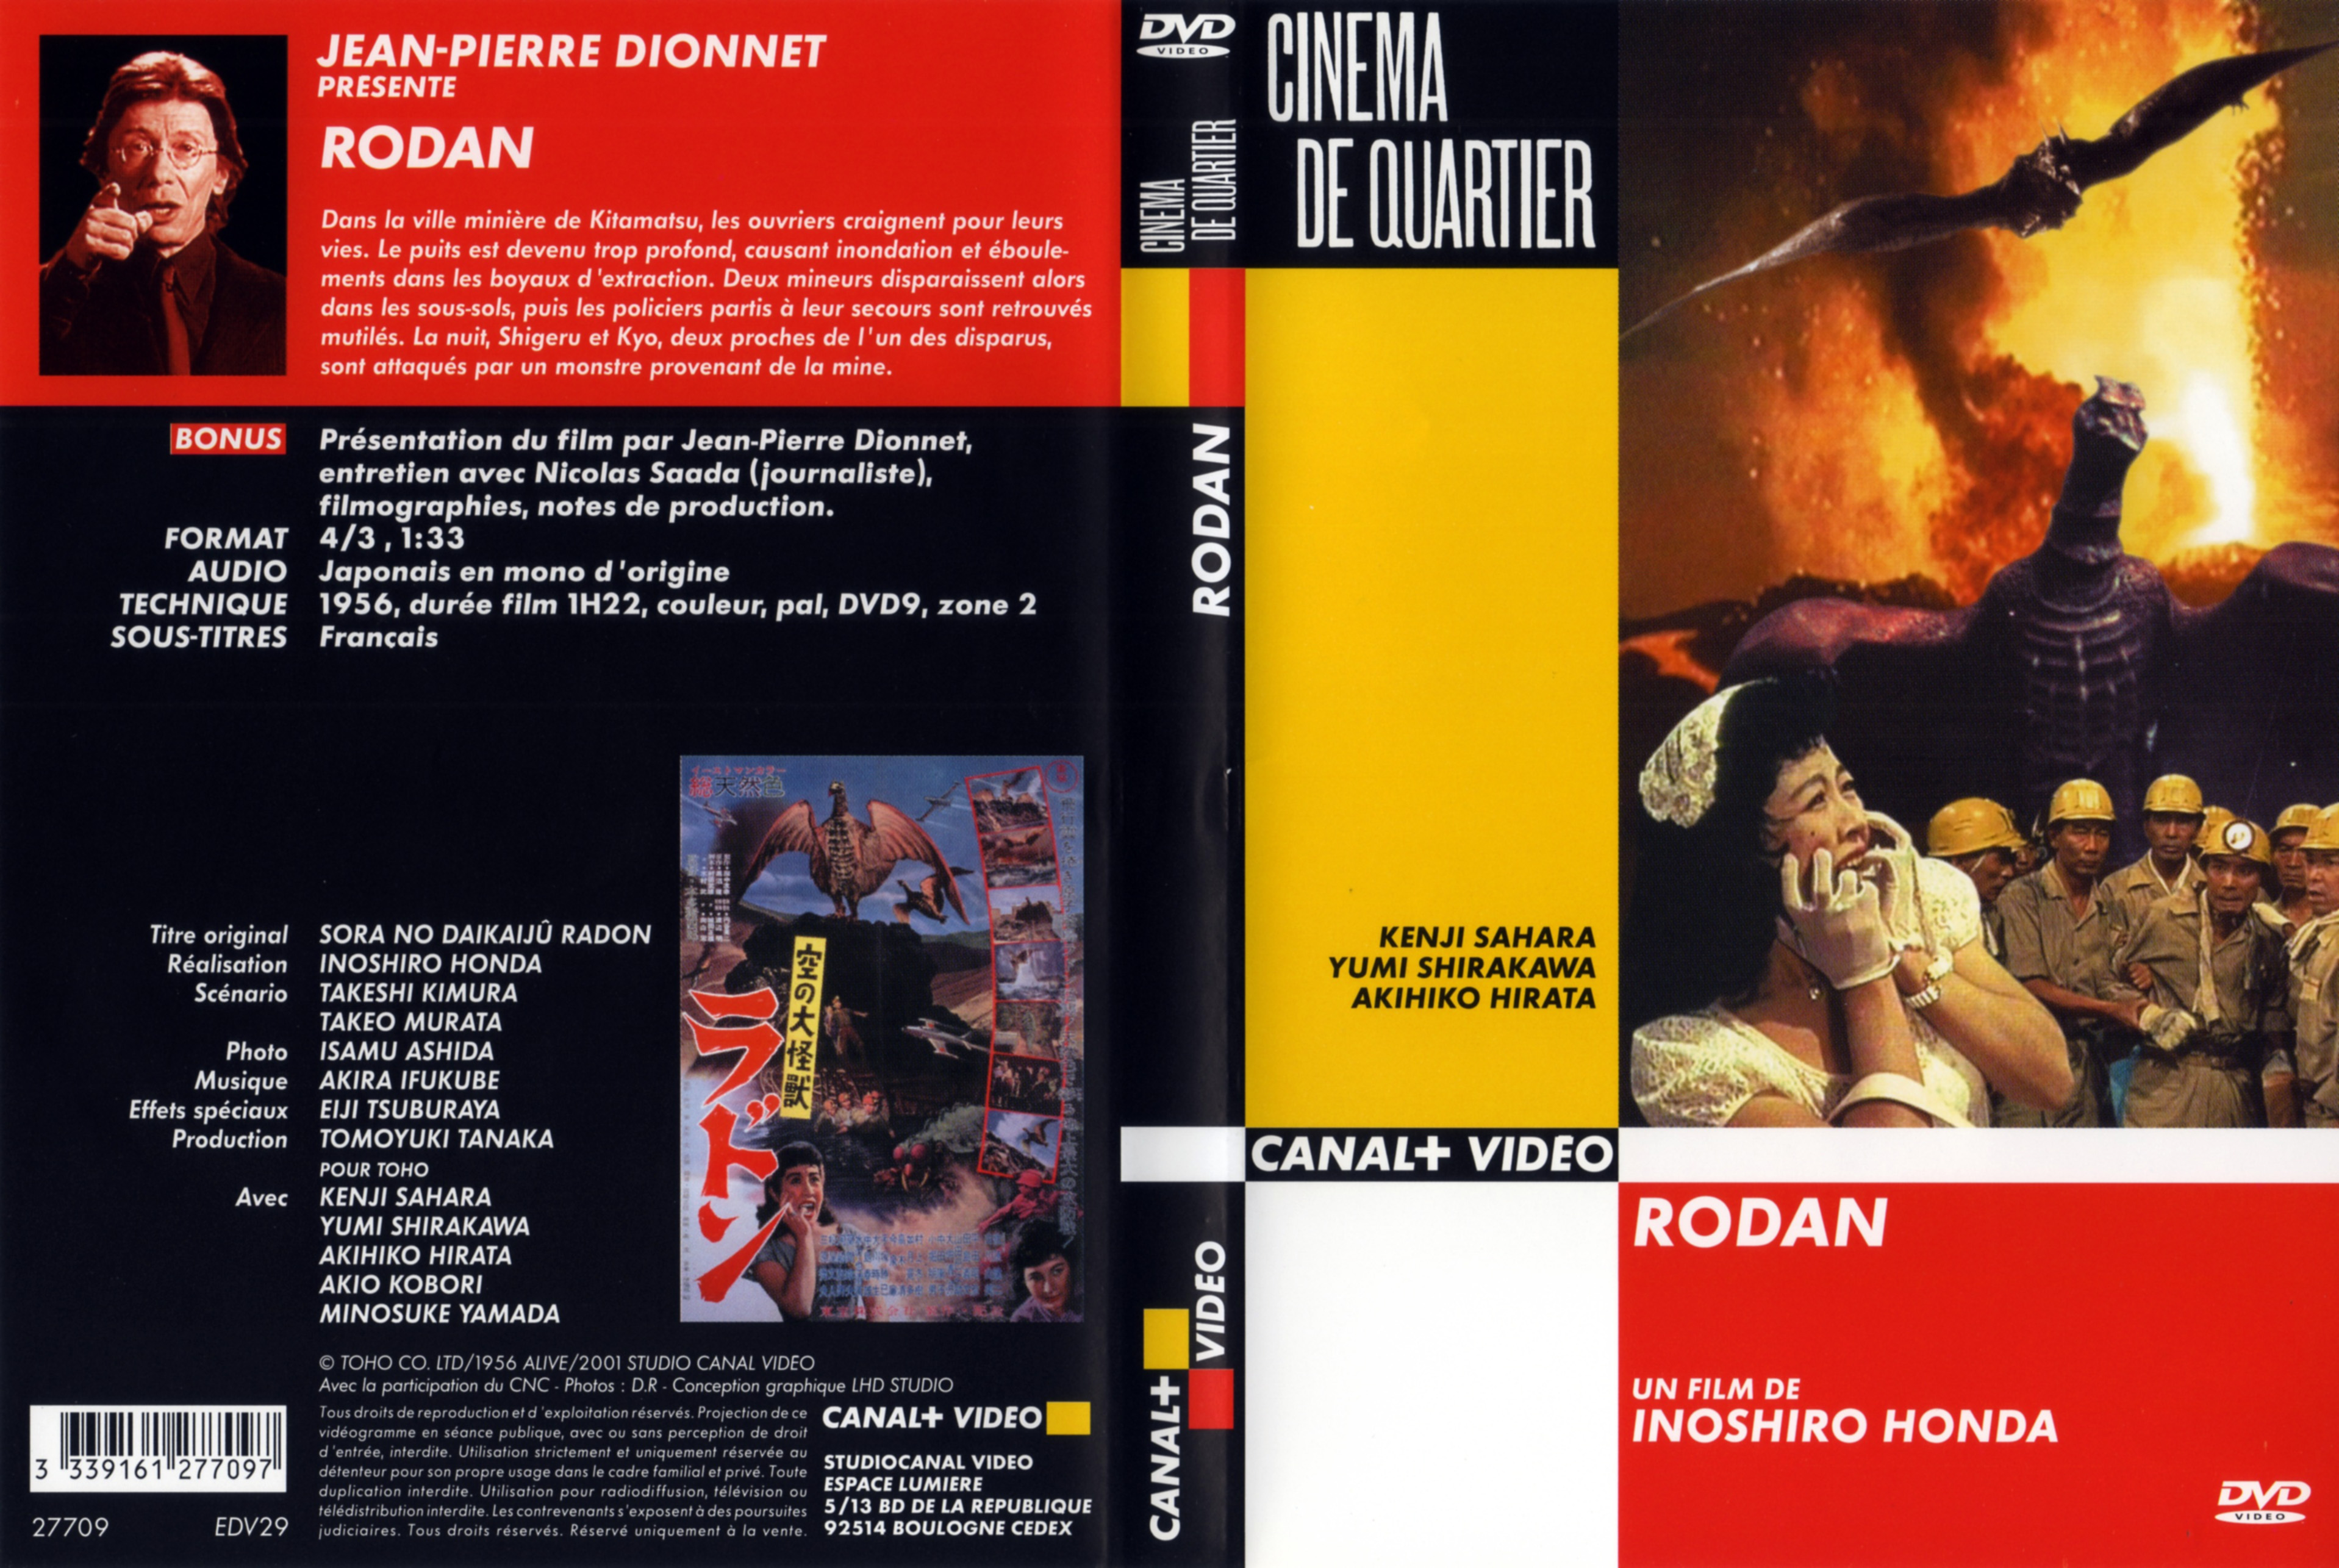 Jaquette DVD Rodan